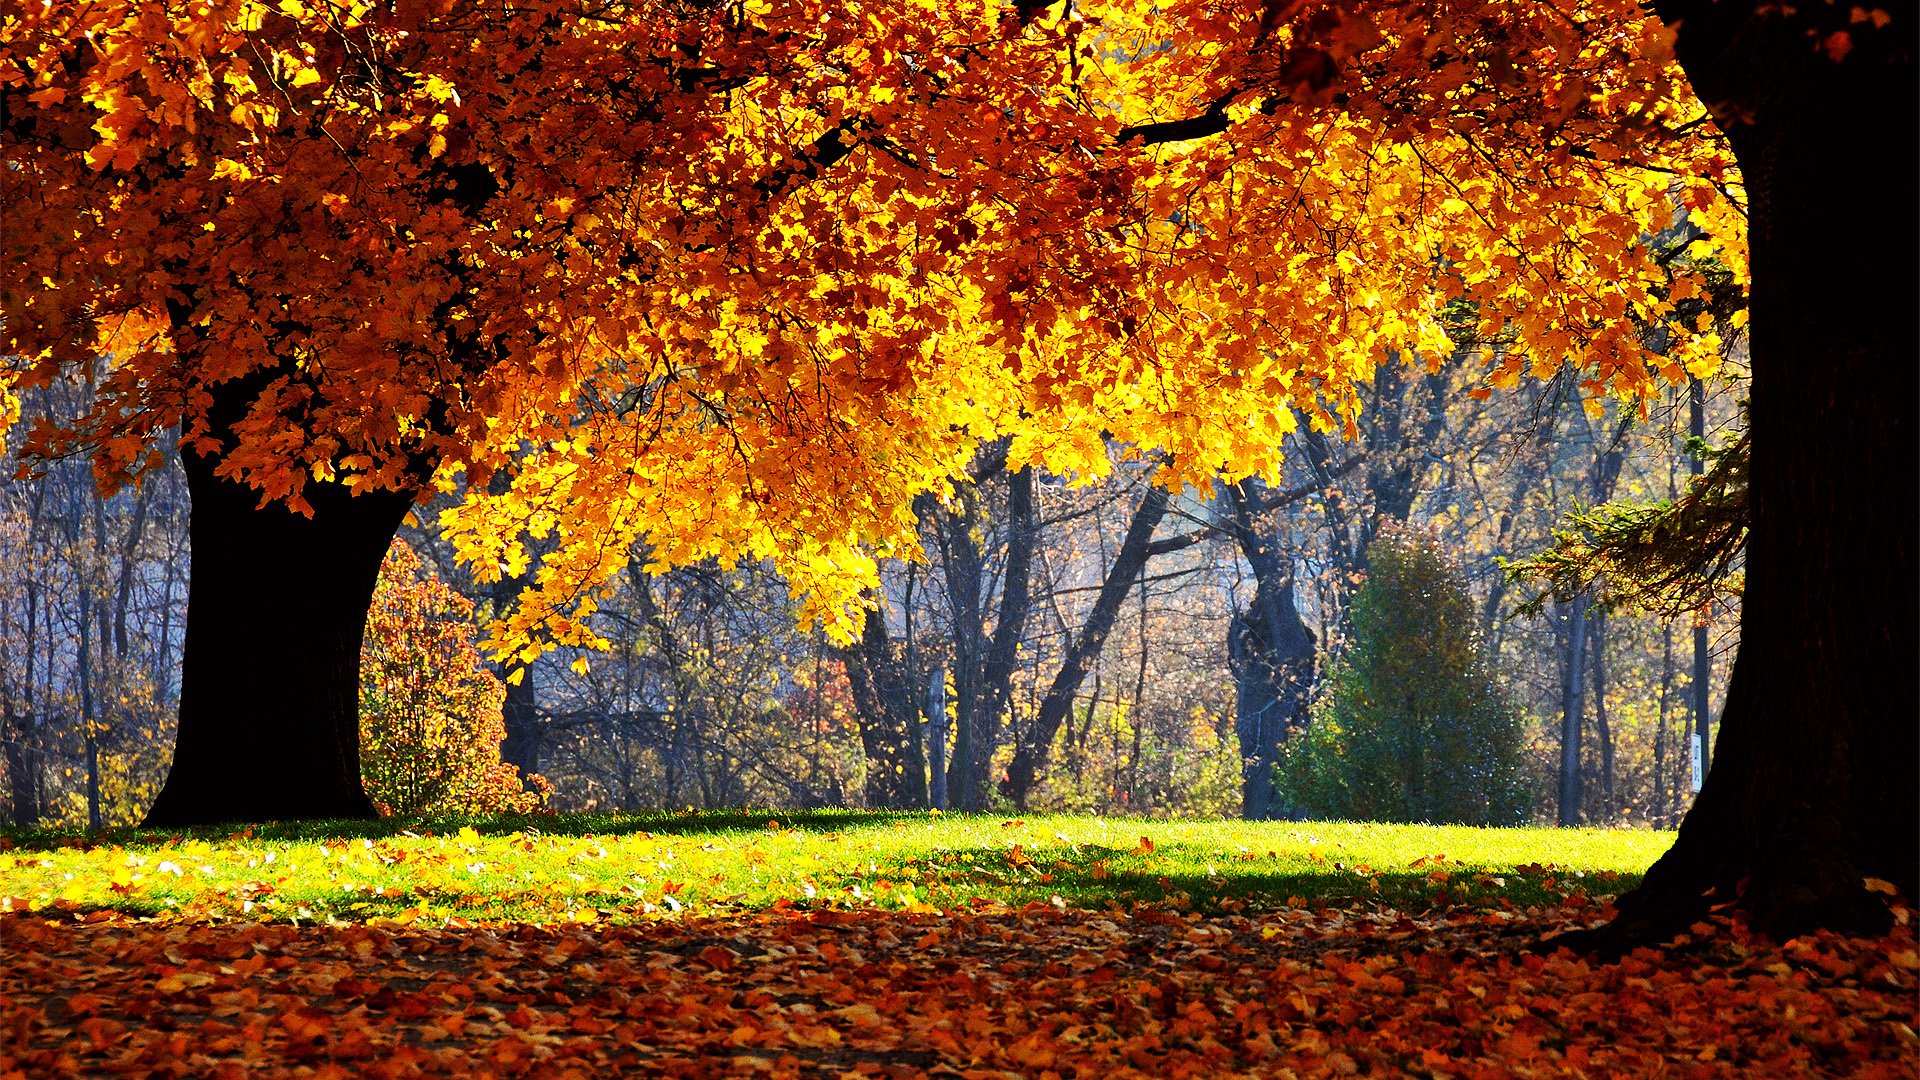 1920x1080p 배경 화면,나무,자연 경관,자연,잎,가을